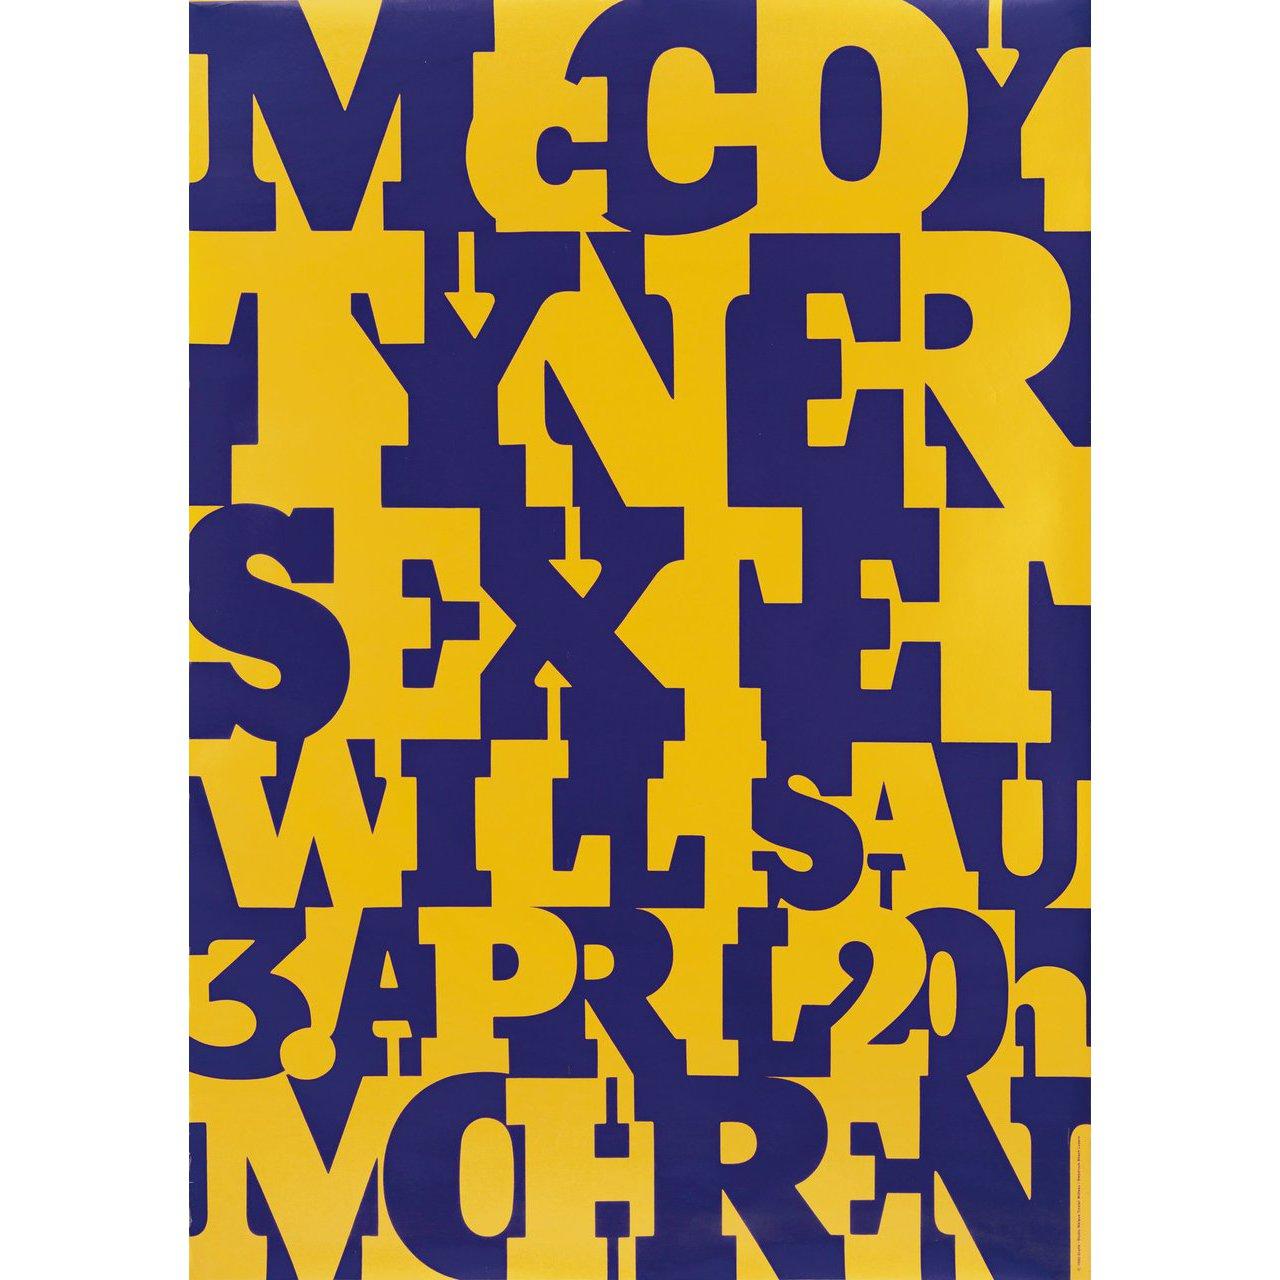 Paper Mccoy Tyner Sextet 1980 Swiss Poster For Sale